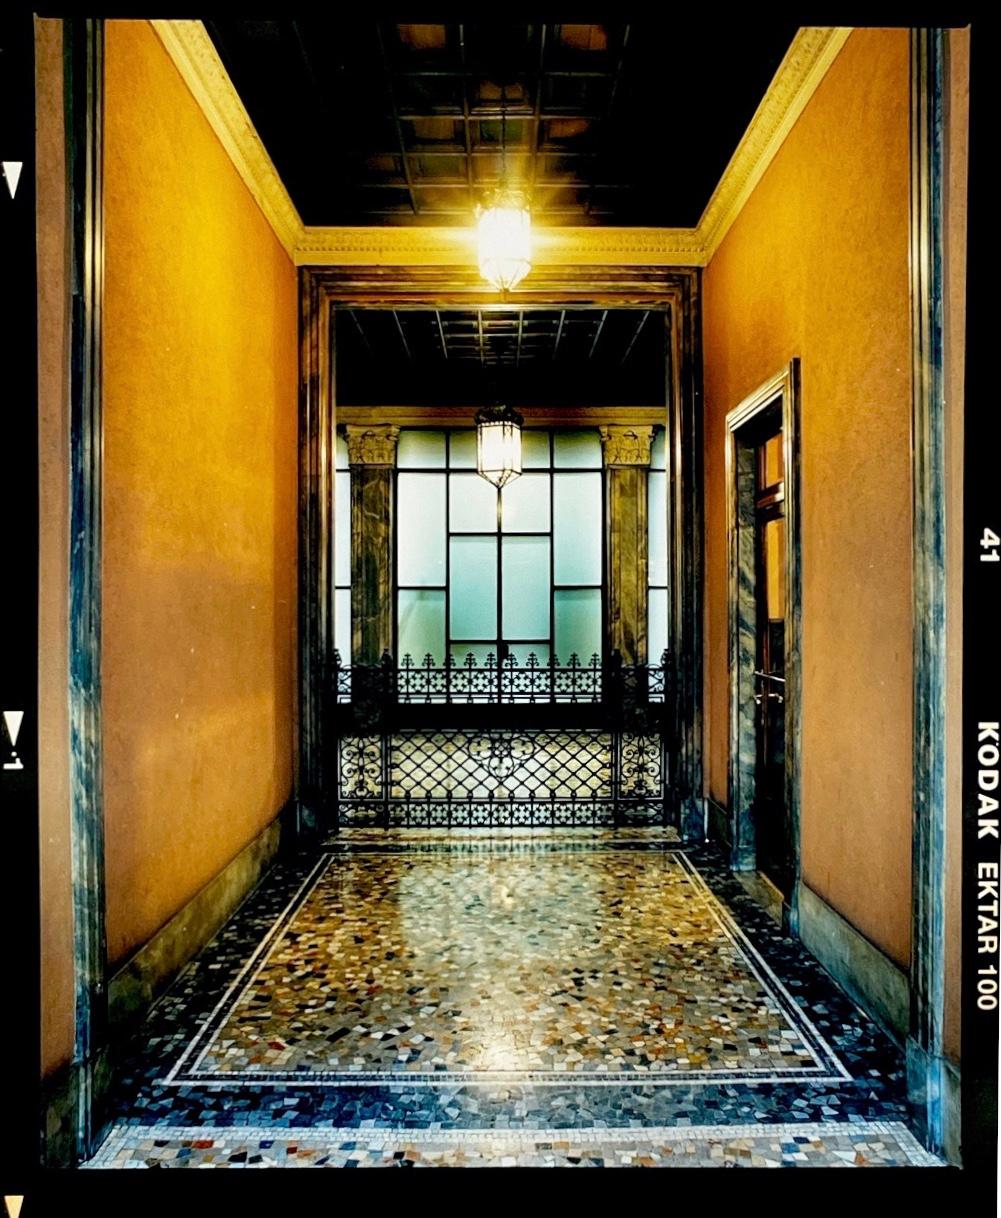 Richard Heeps Print – Foyer III, Mailand – Architekturfotografie in Farbfotografie